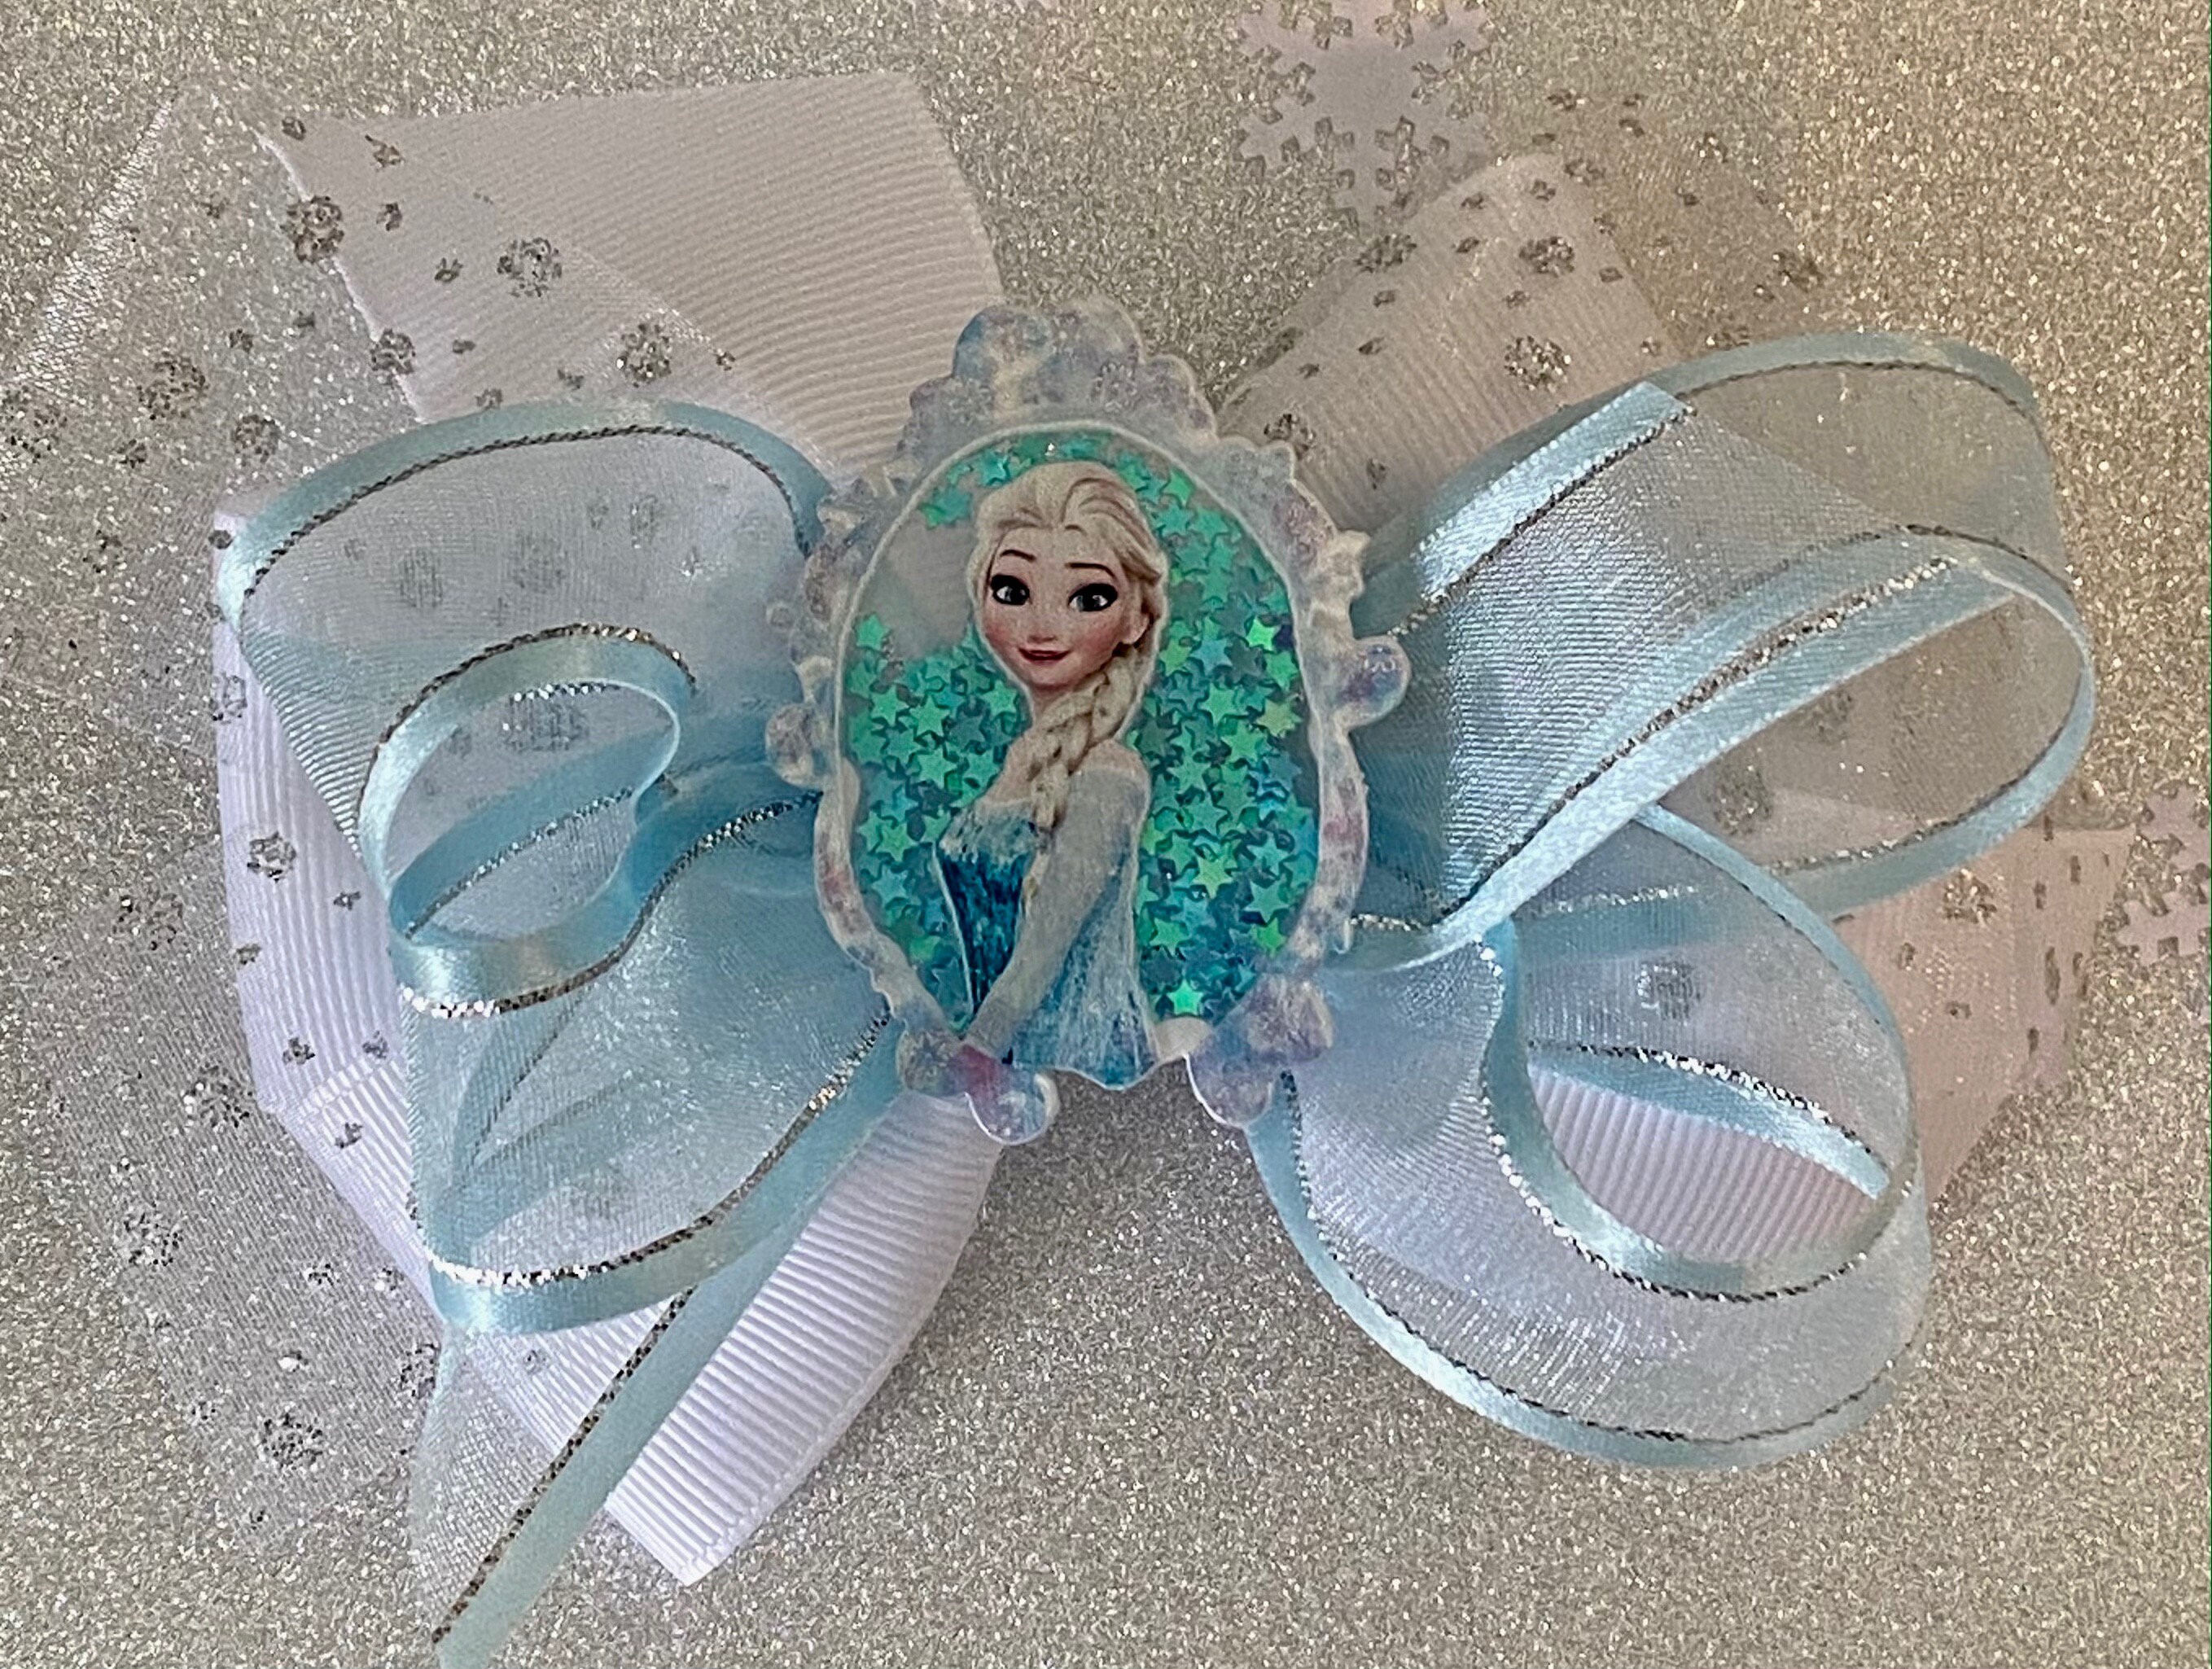 Disney Frozen Elsa Princess Hair Accessories Hairpin Cute Bow